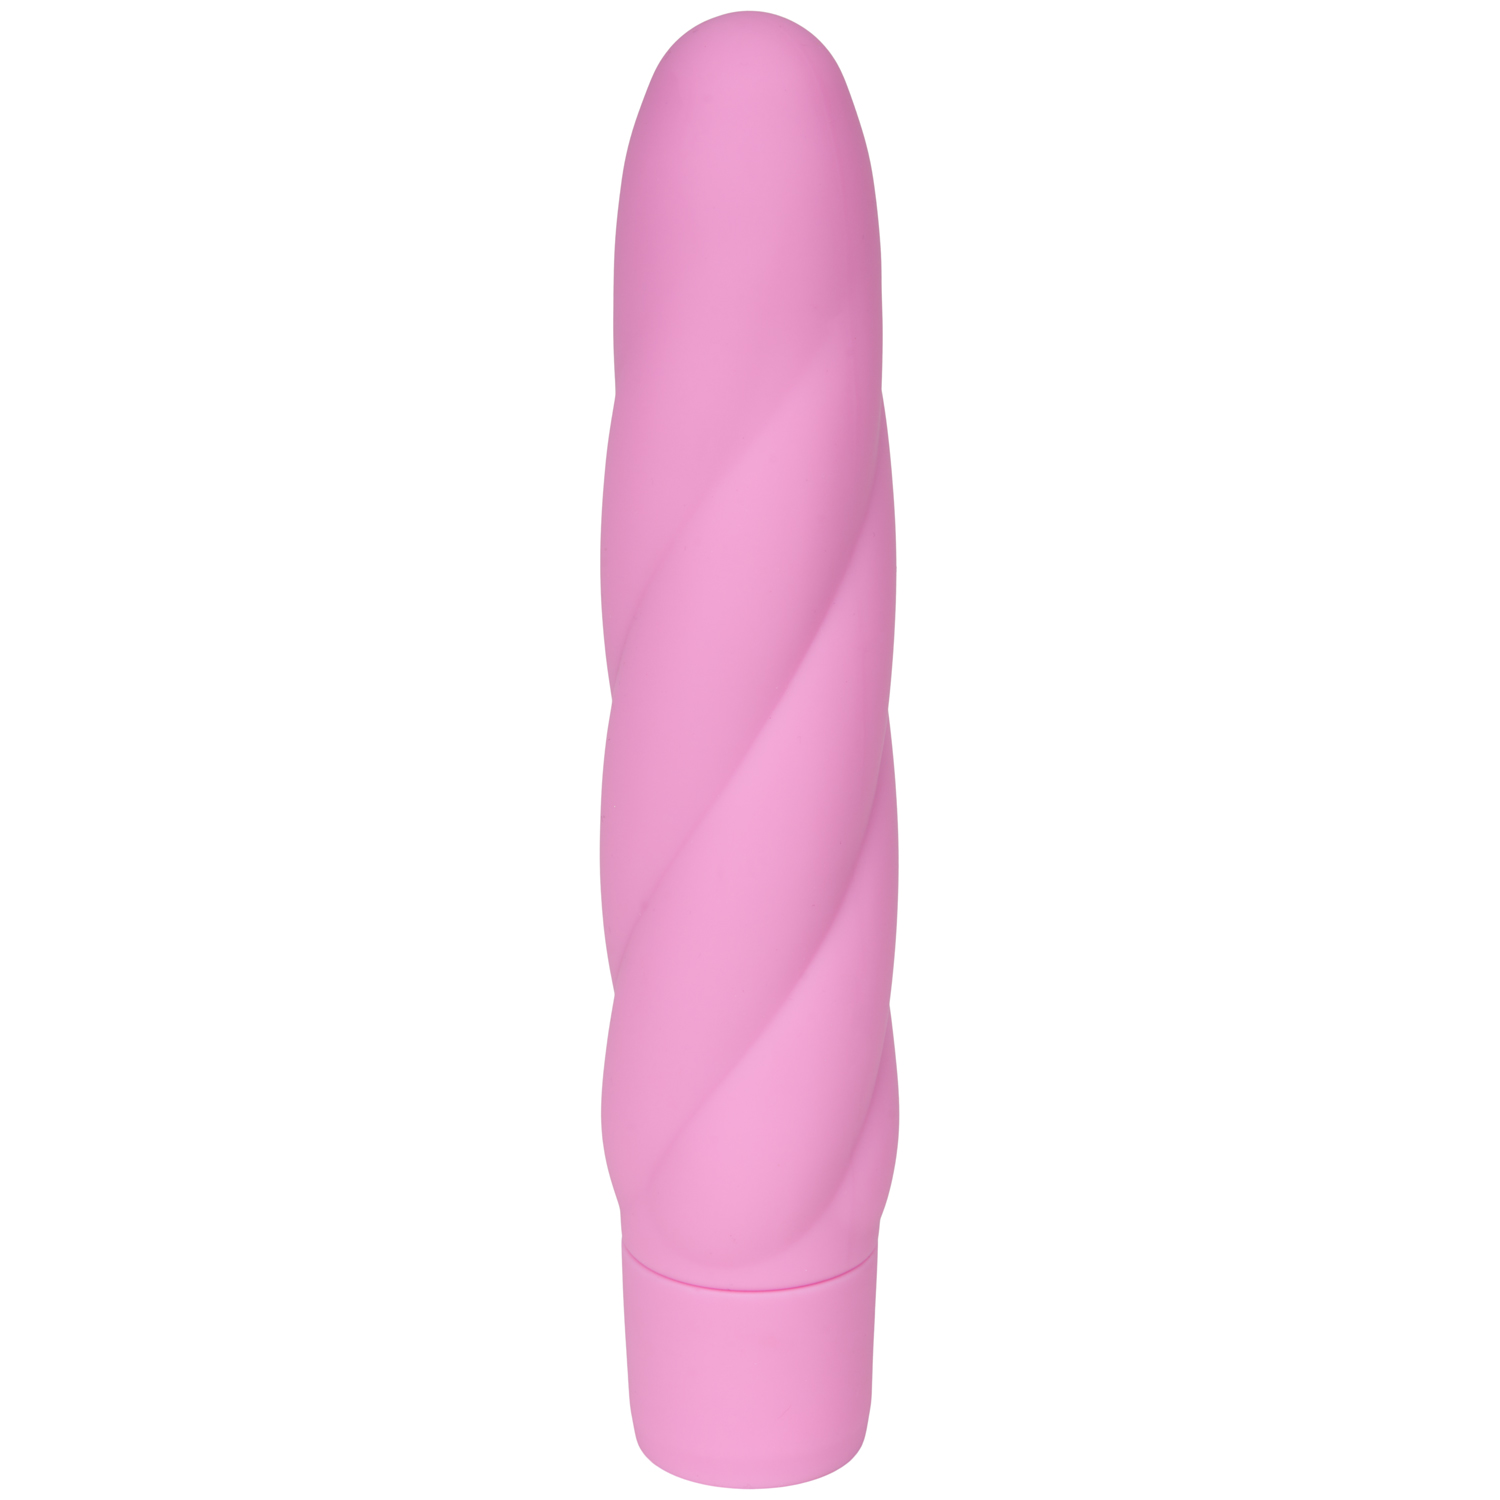 baseks Lust Dildo Vibrator - Pink